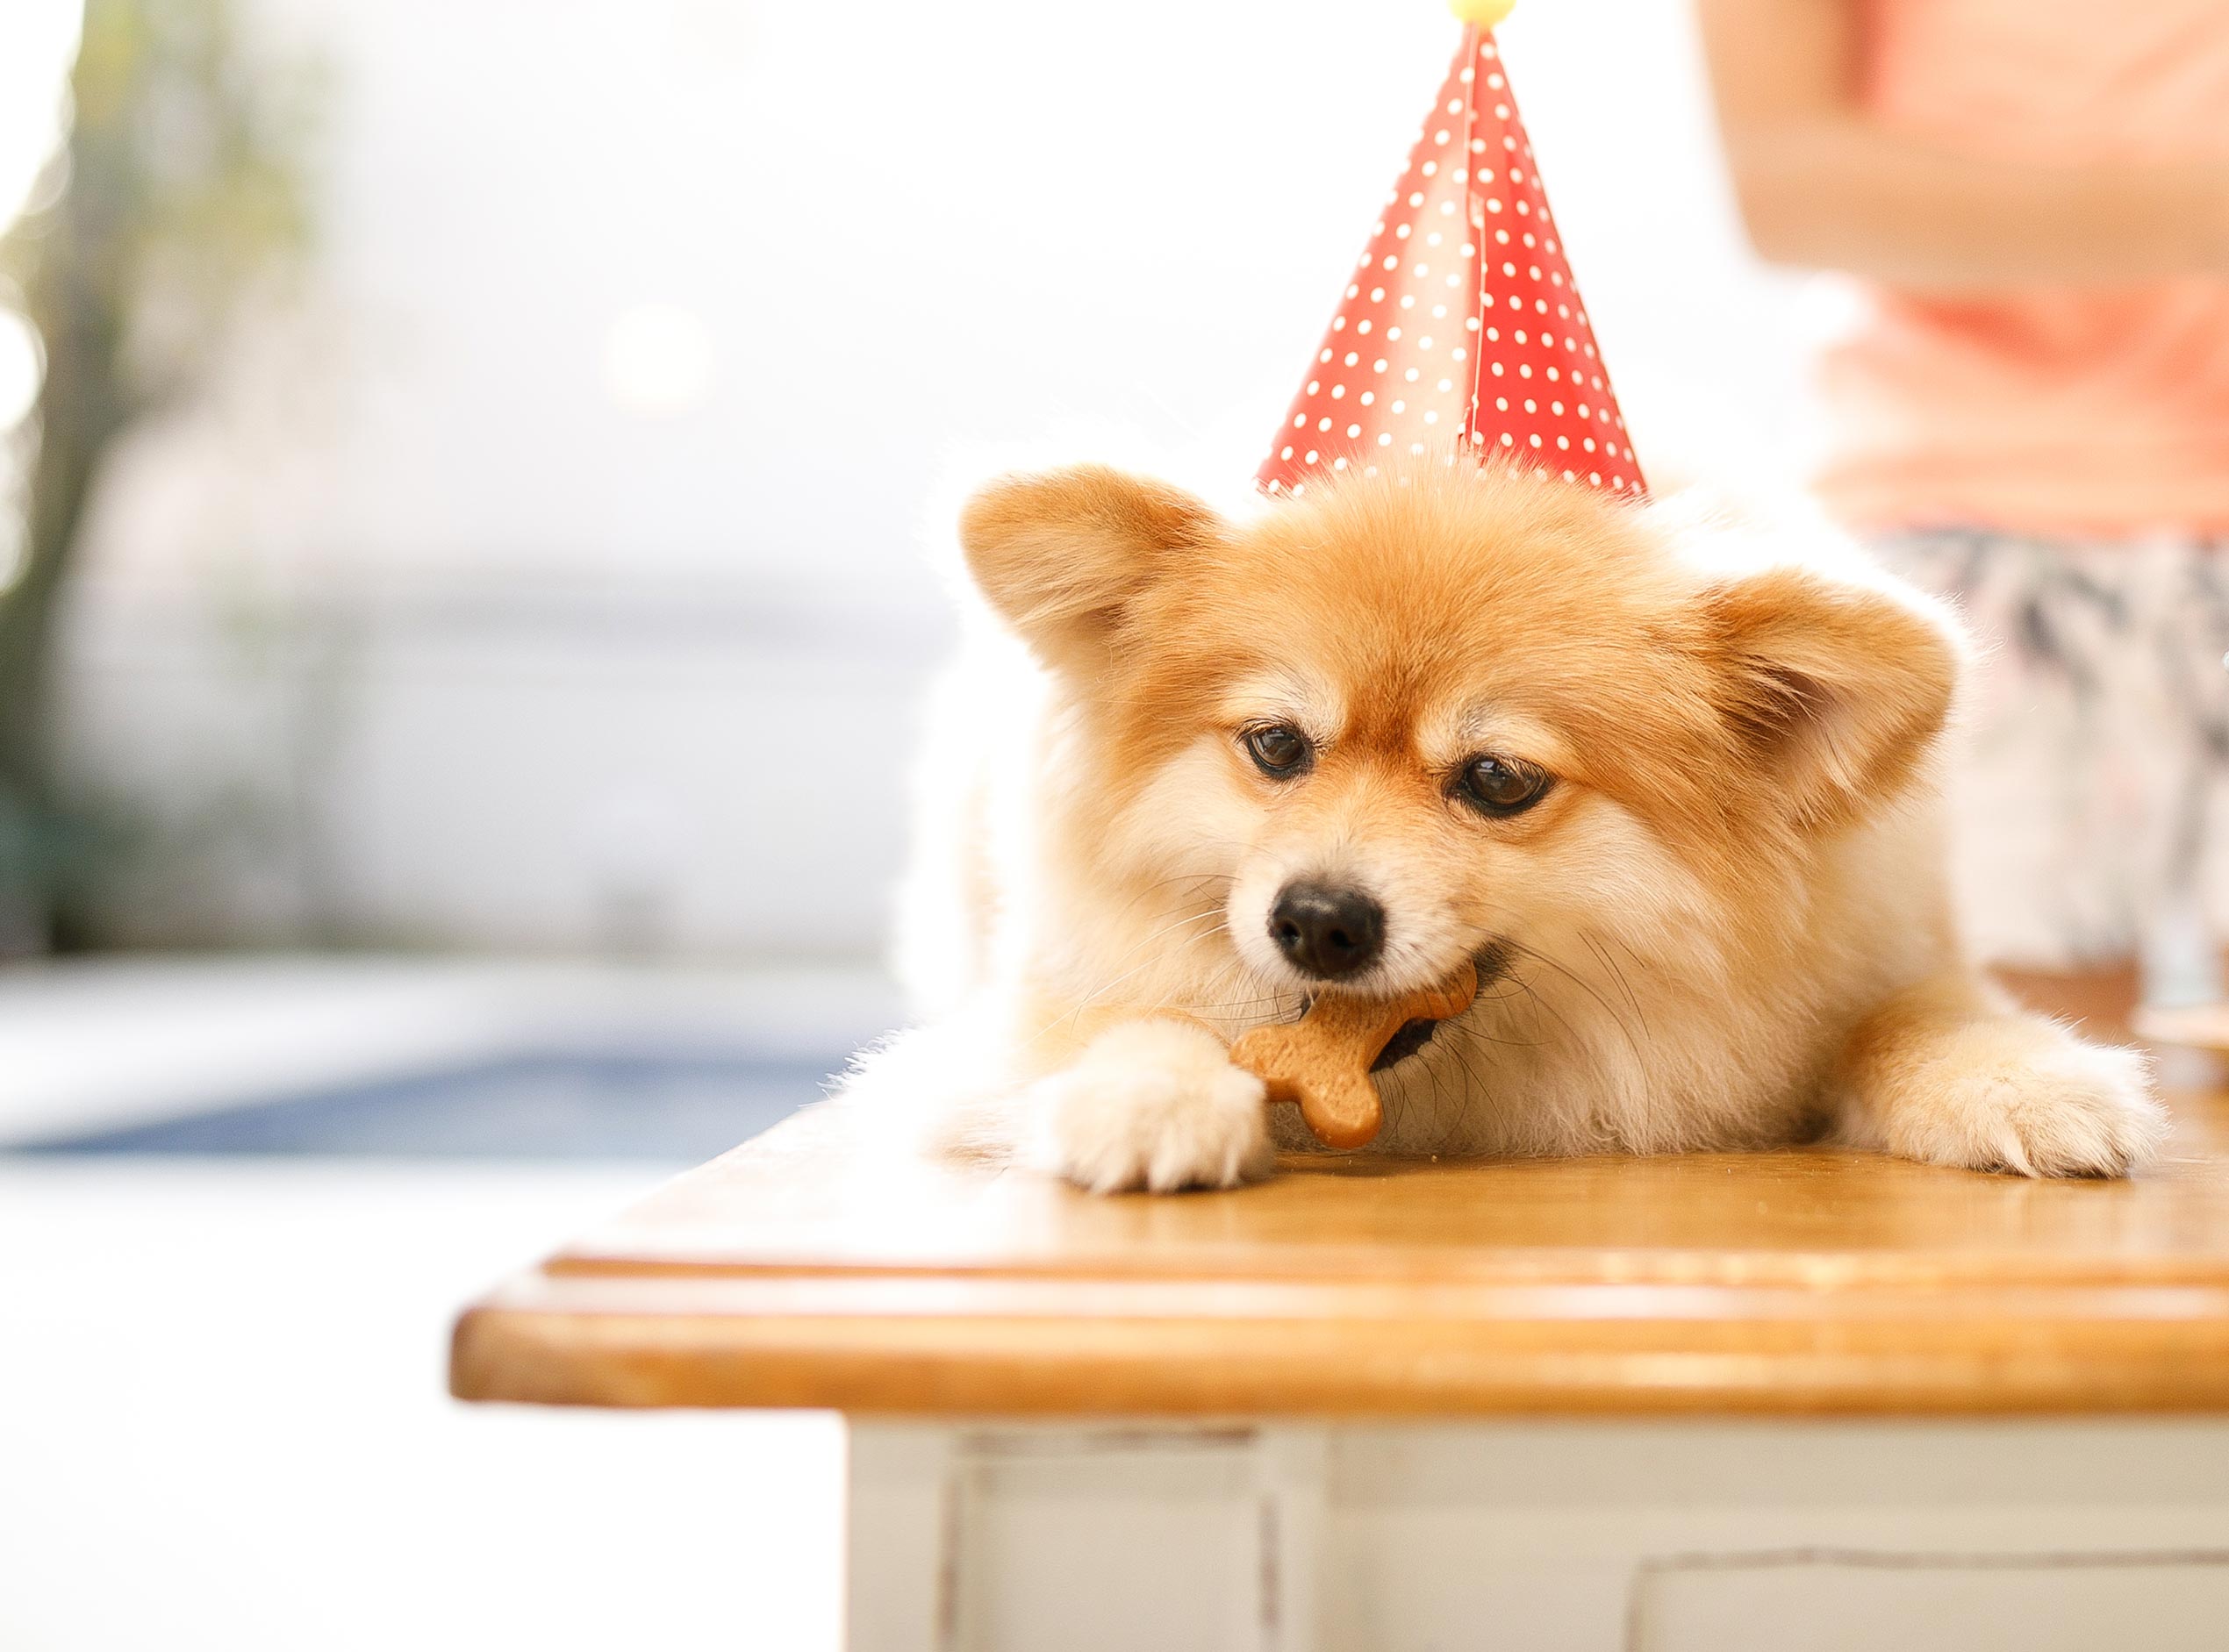 Dog enjoying a birthday cookie